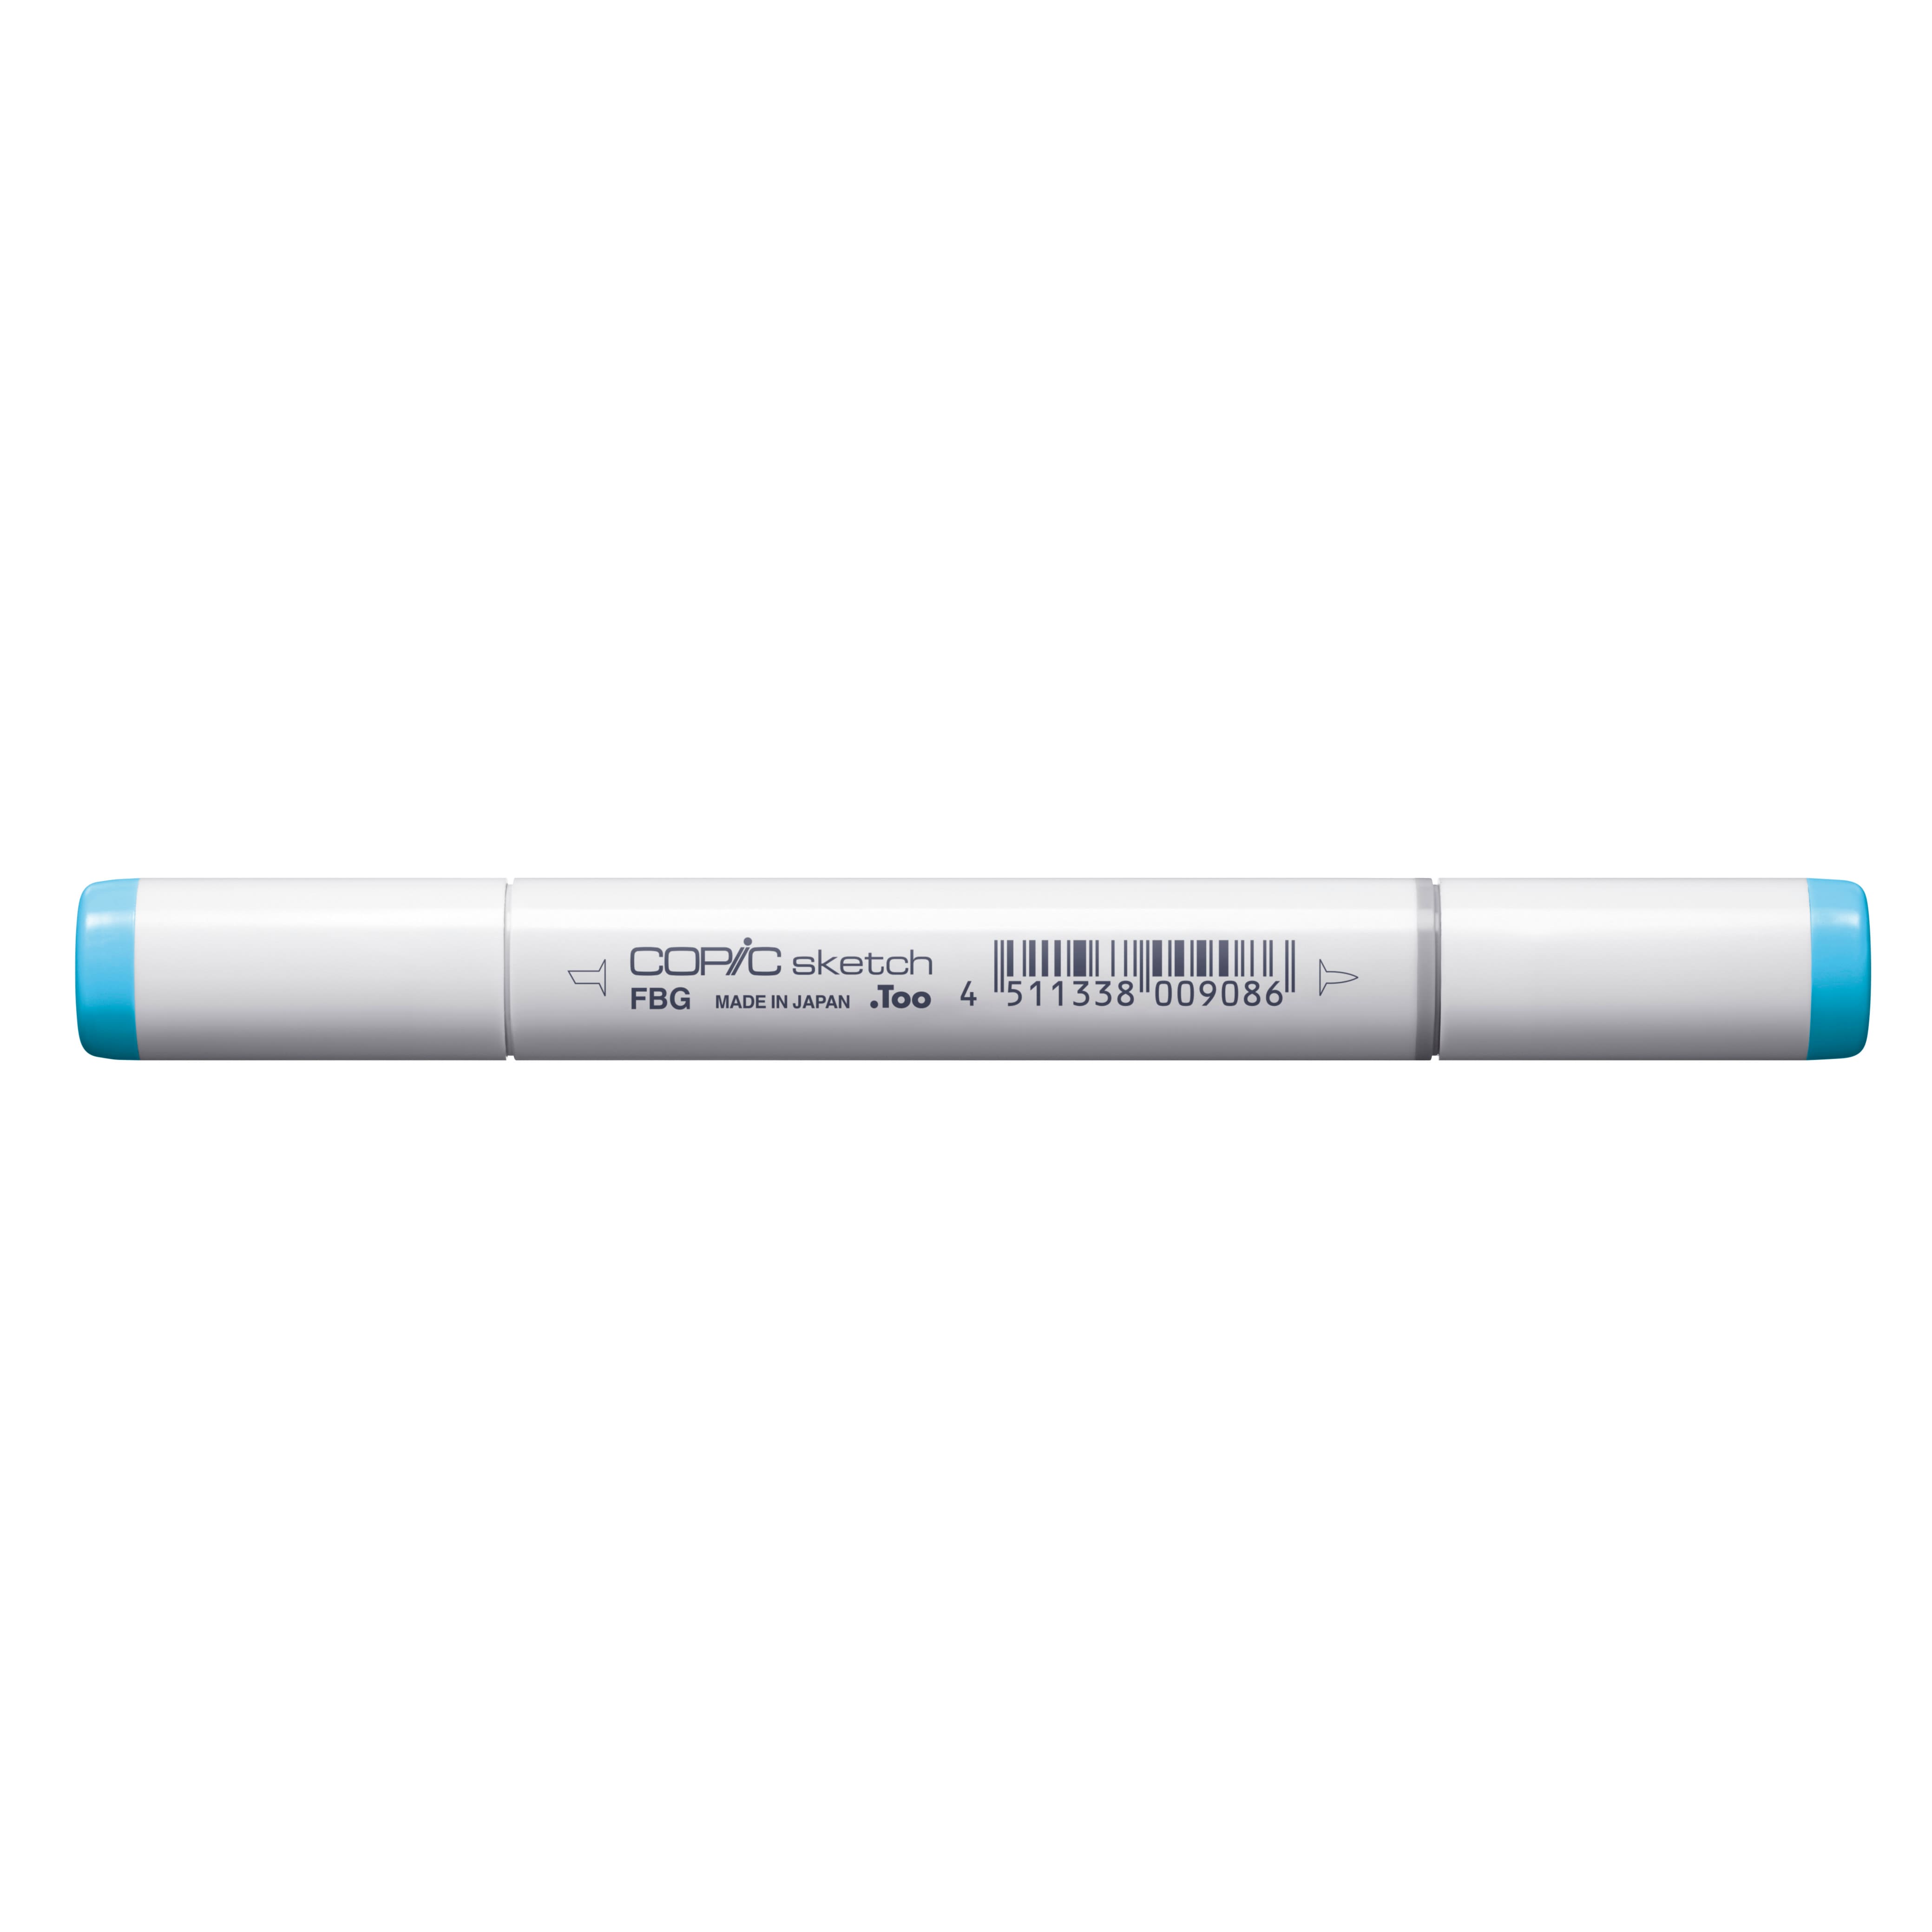 ChrisNik 280930-002 Ideal Mark Blue Markers w/ Clip